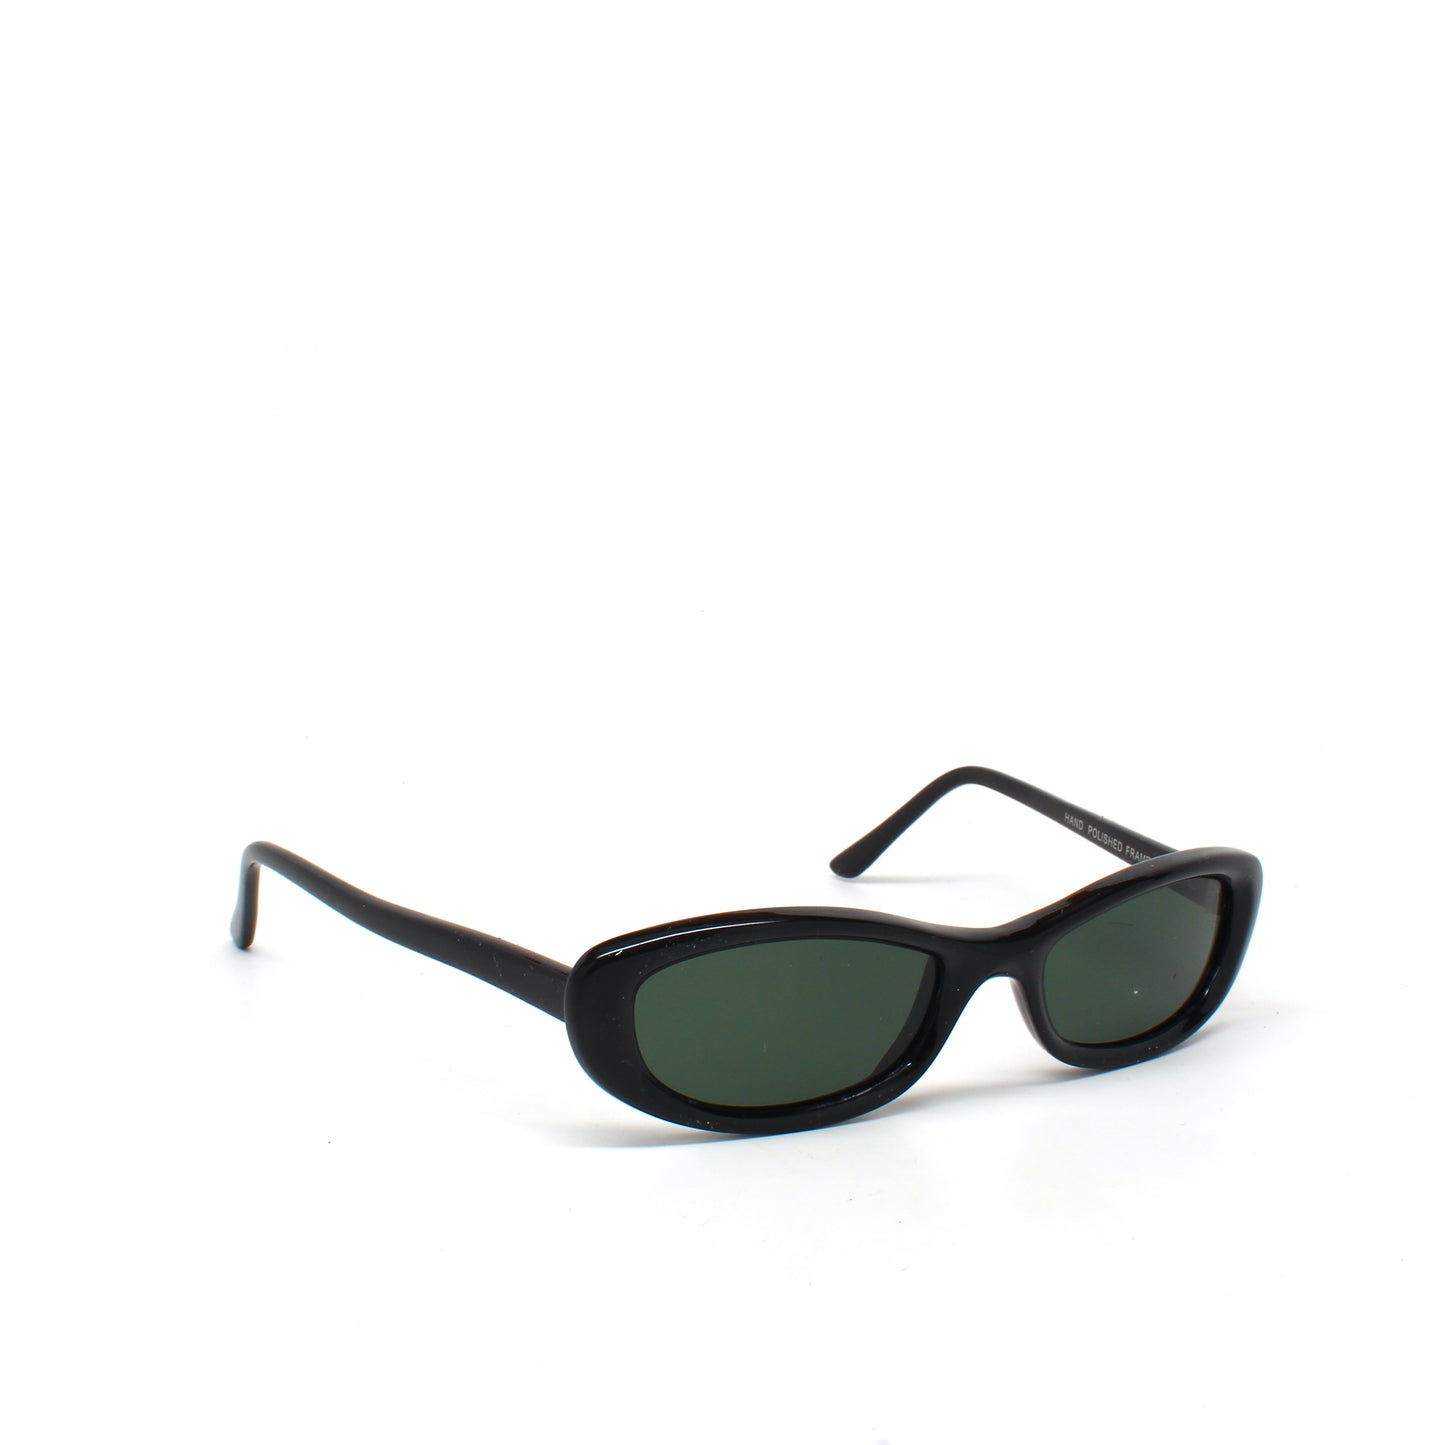 Vintage Small Sized 90s Mod Slim Narrow Rectangle Shape Sunglasses - Black